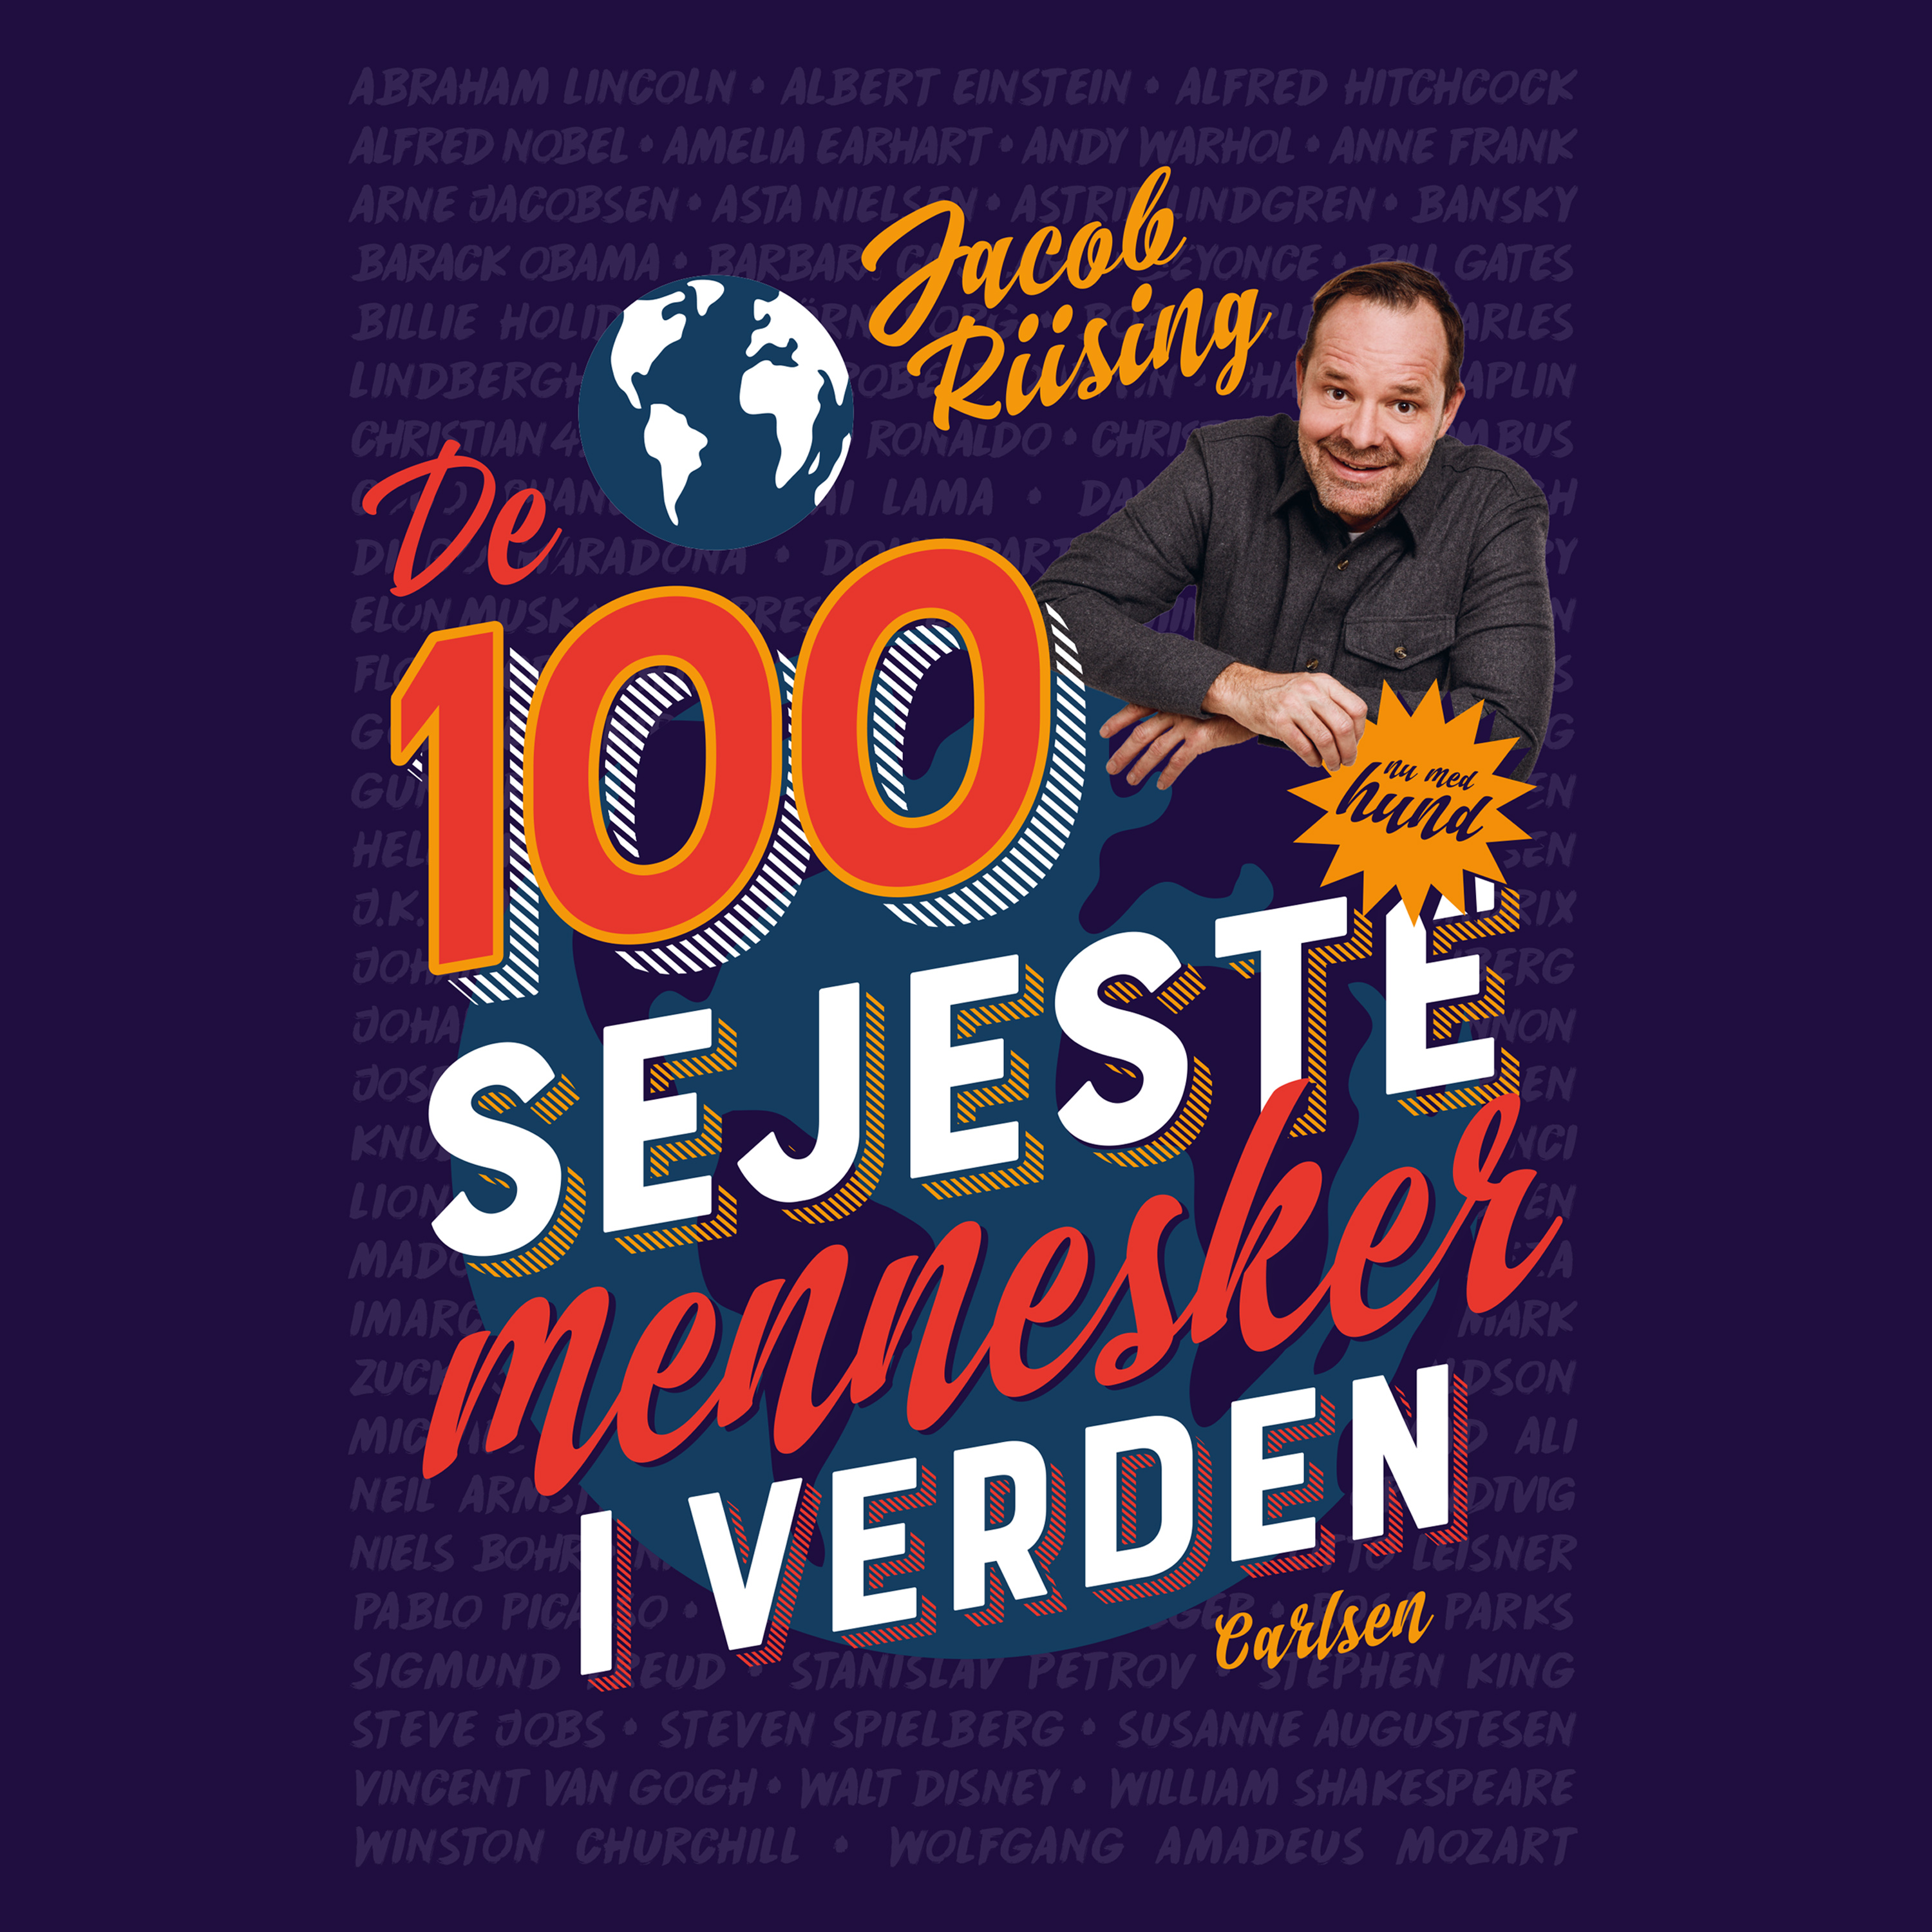 De 100 Sejeste Mennesker I Verden Audiobook By Jacob Terp Riising Sesamy